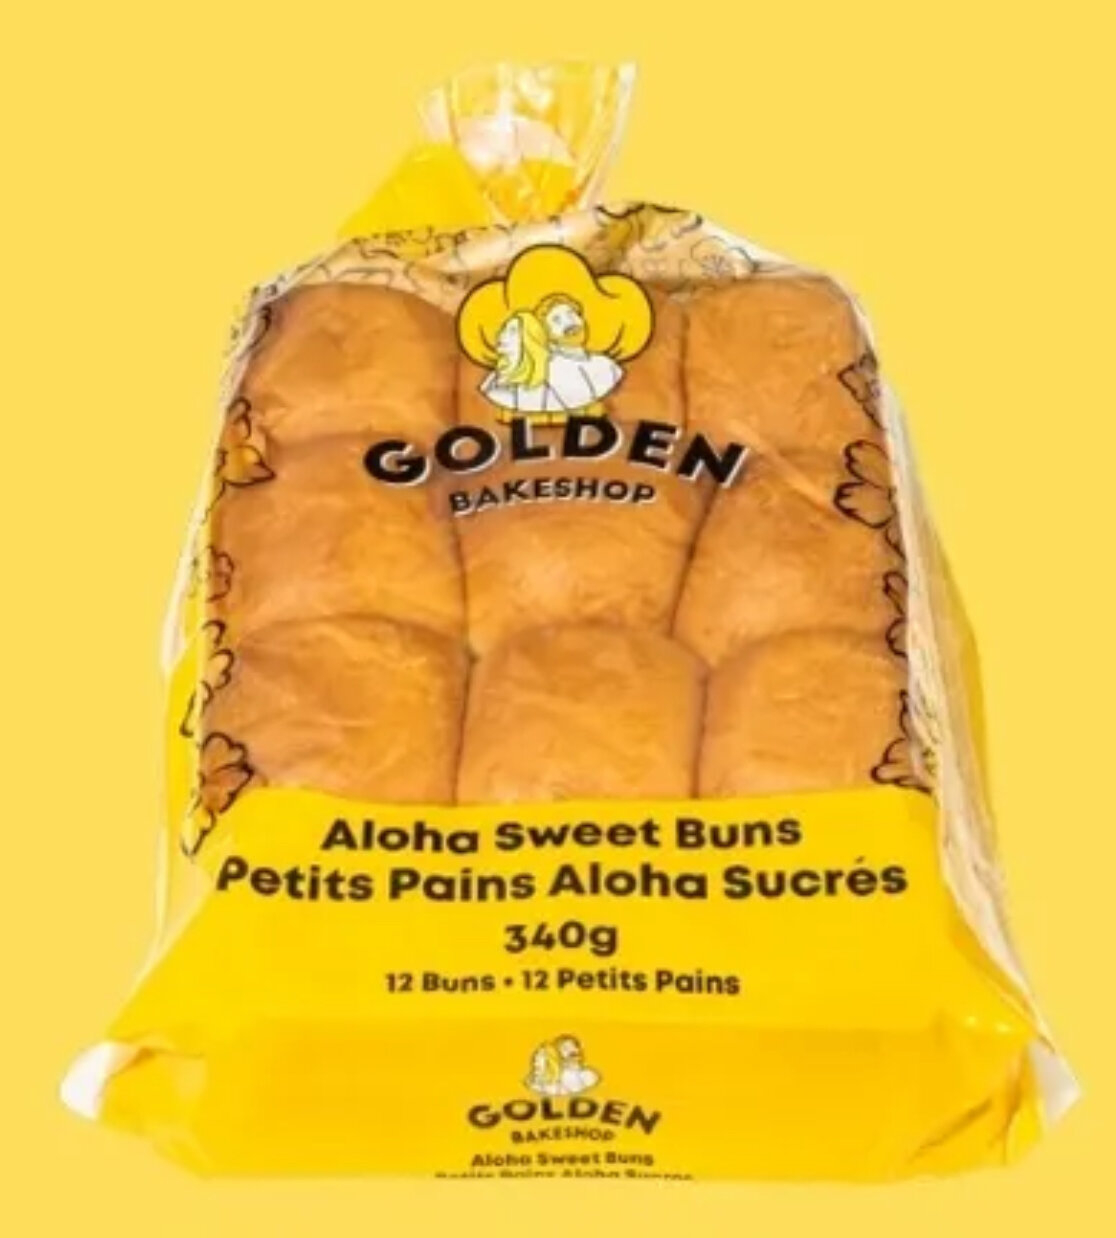 Golden Bakeshop - Aloha Sweet Buns